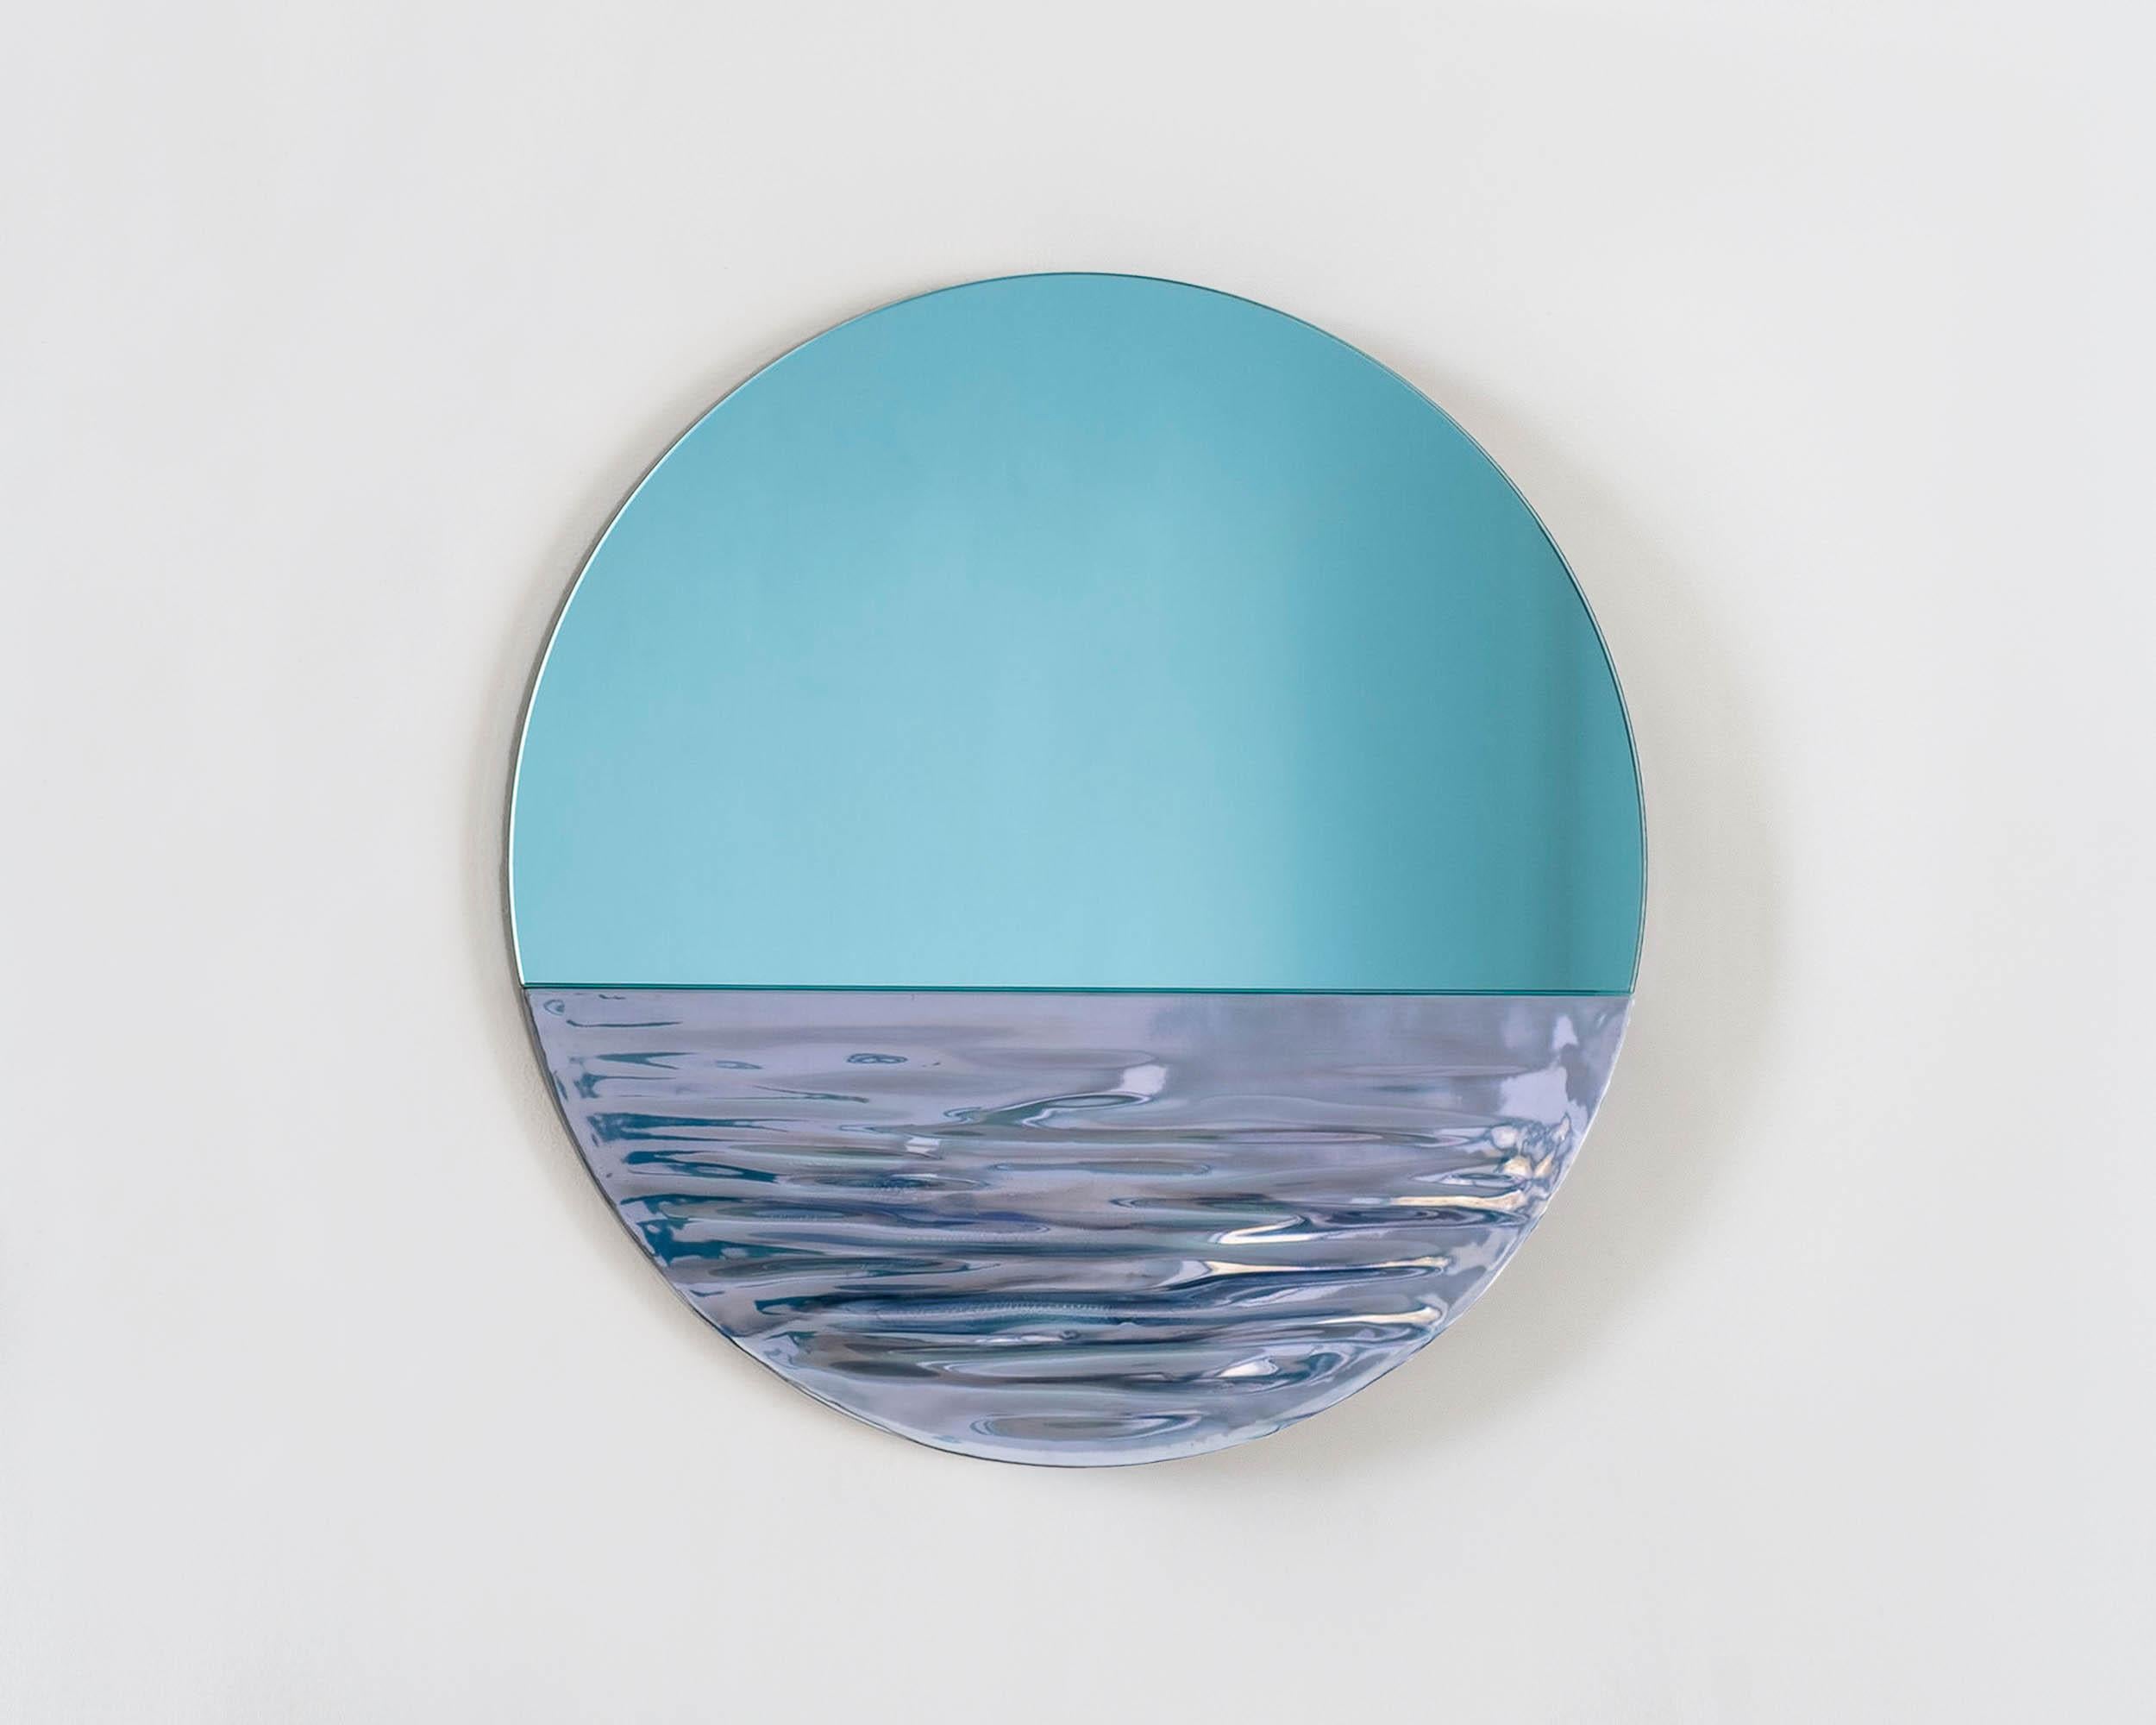 Organic Modern Contemporary Round Mirror 'Orizon Vivid Blue' by Ocrùm 'Ceramic' For Sale